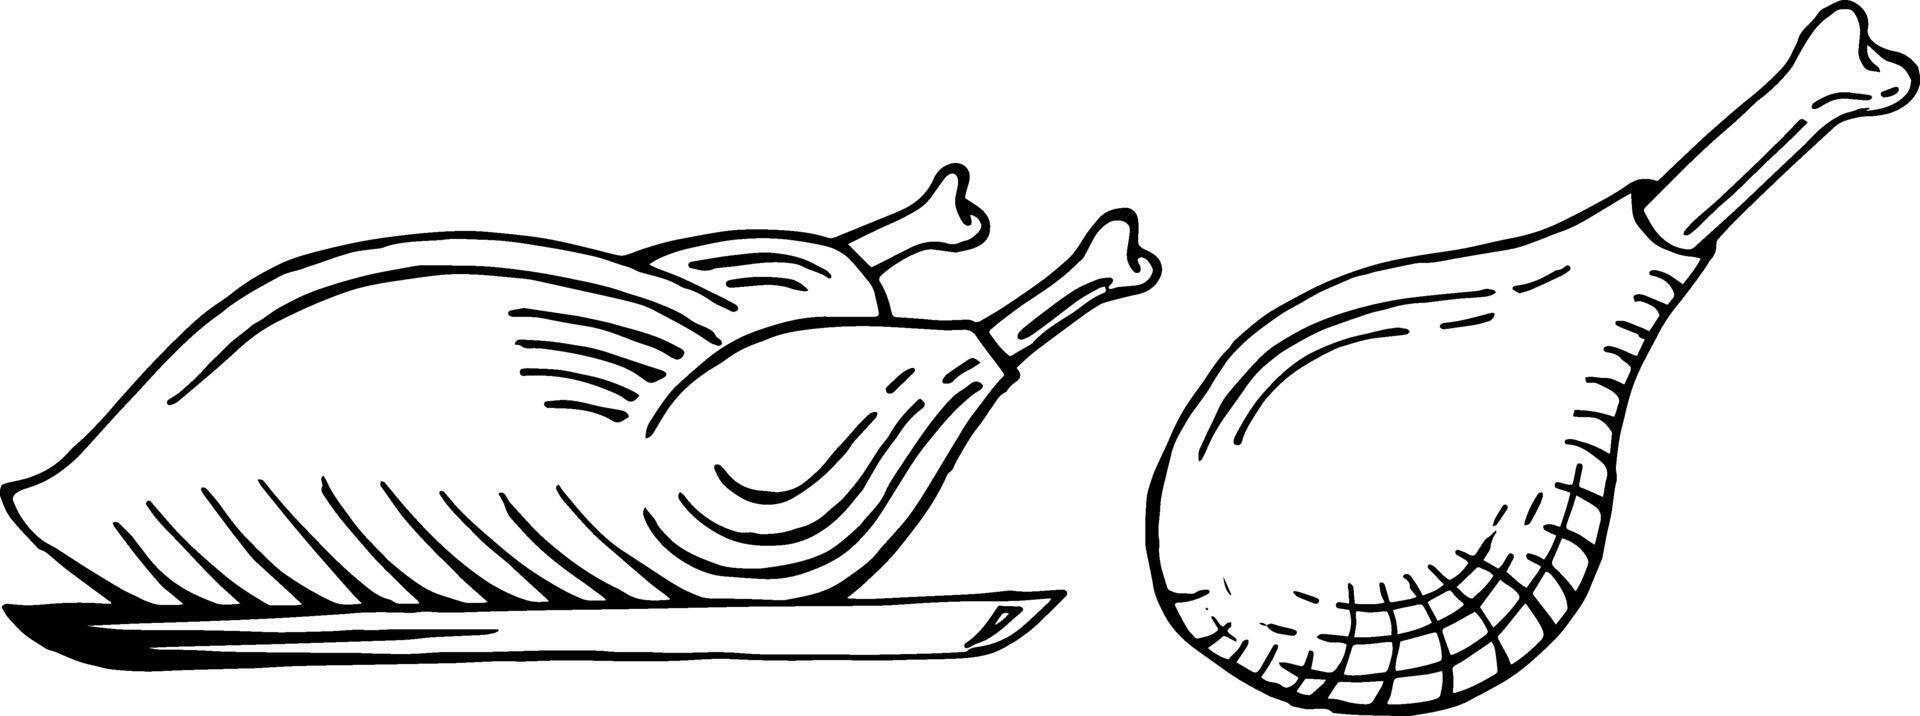 hand drawn roasted chicken dish  vector illustration